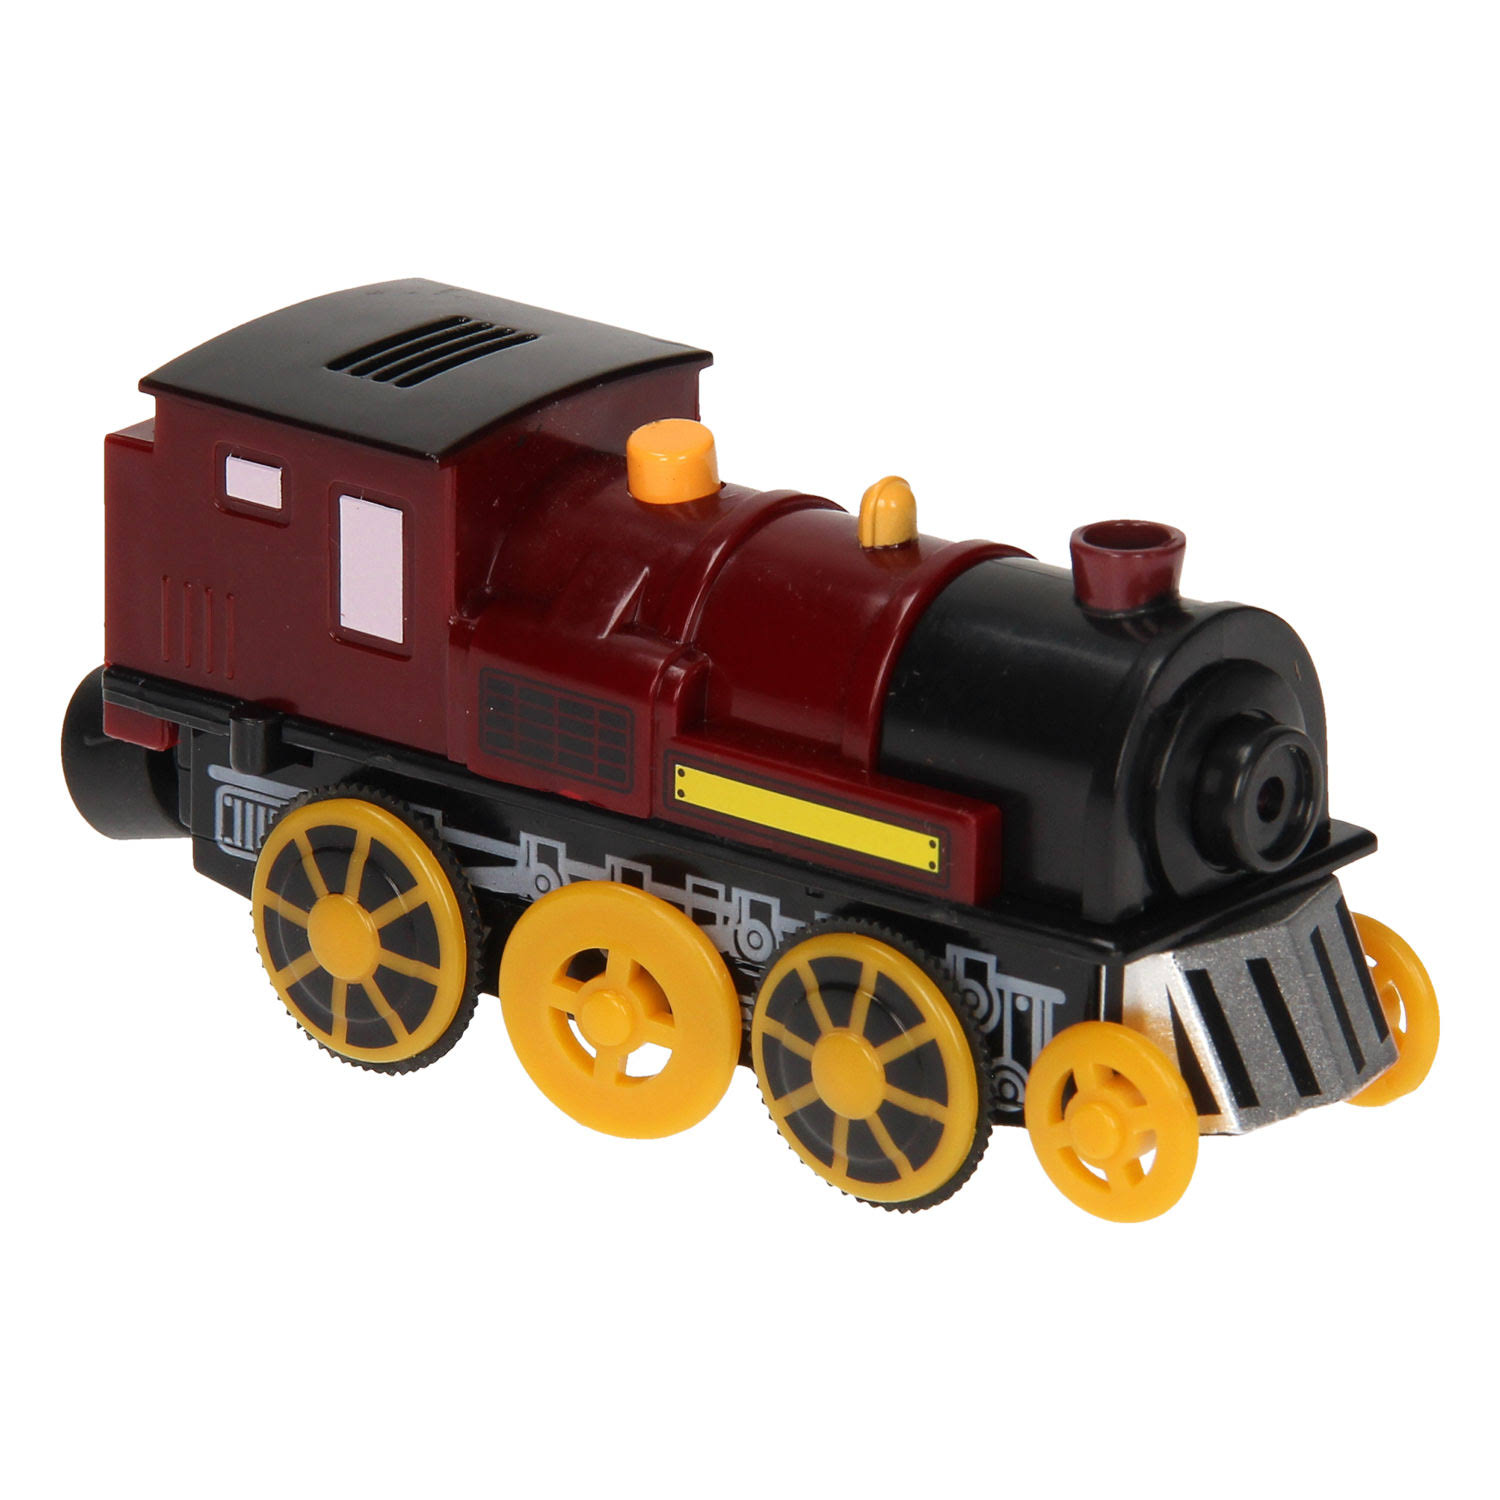 Maxim Wooden Railway Train Toy Set - Red